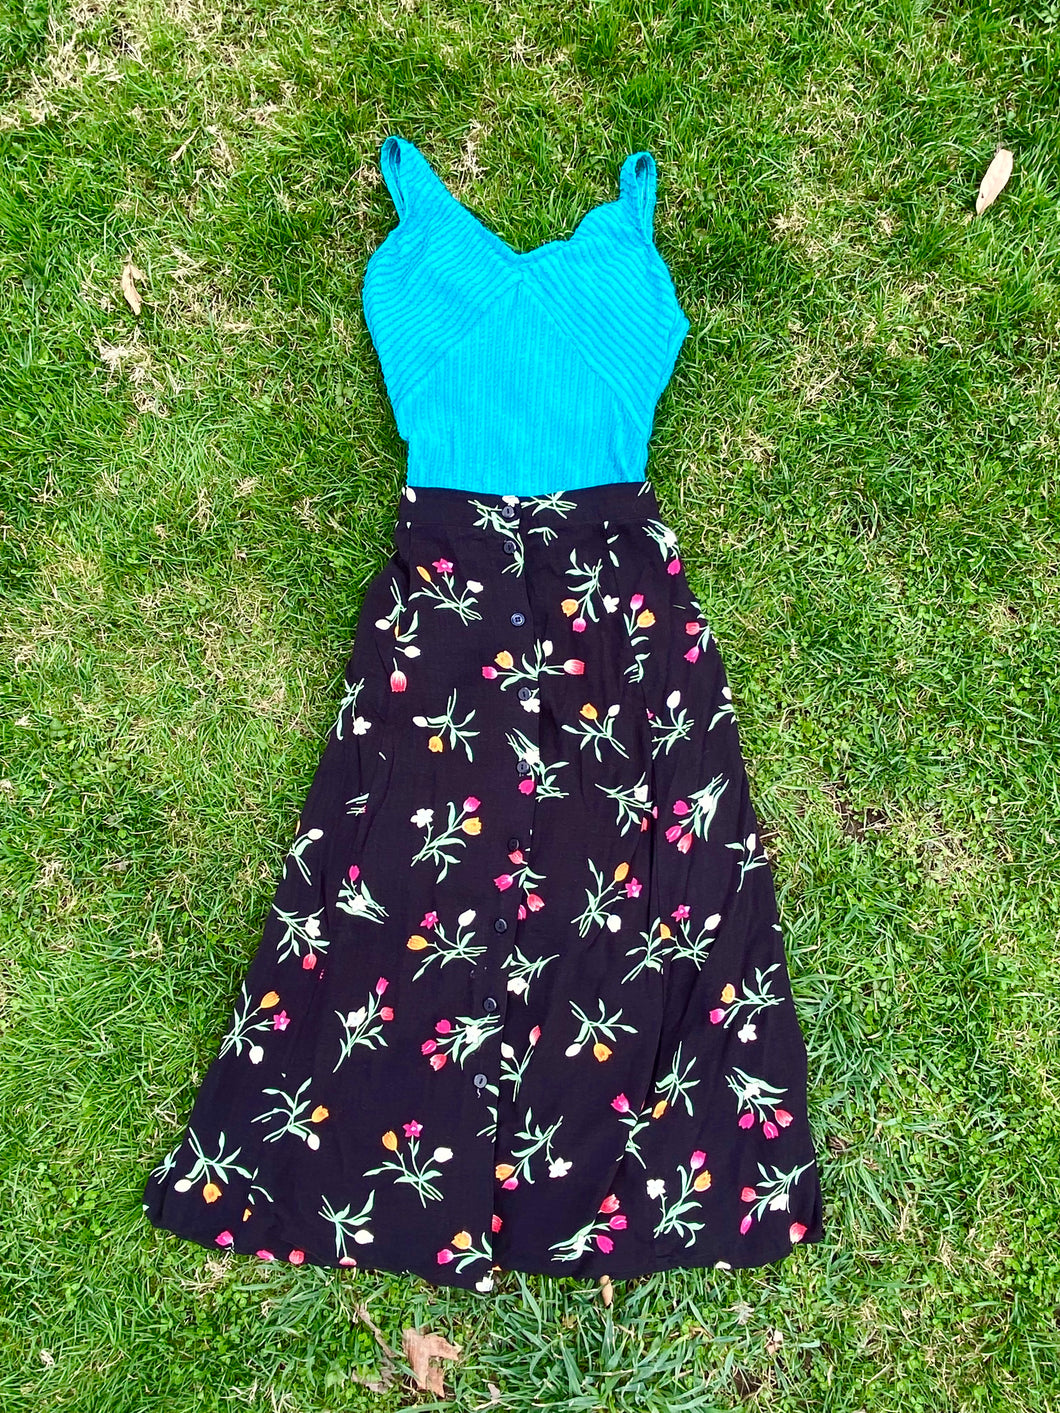 90s Black Floral Skirt